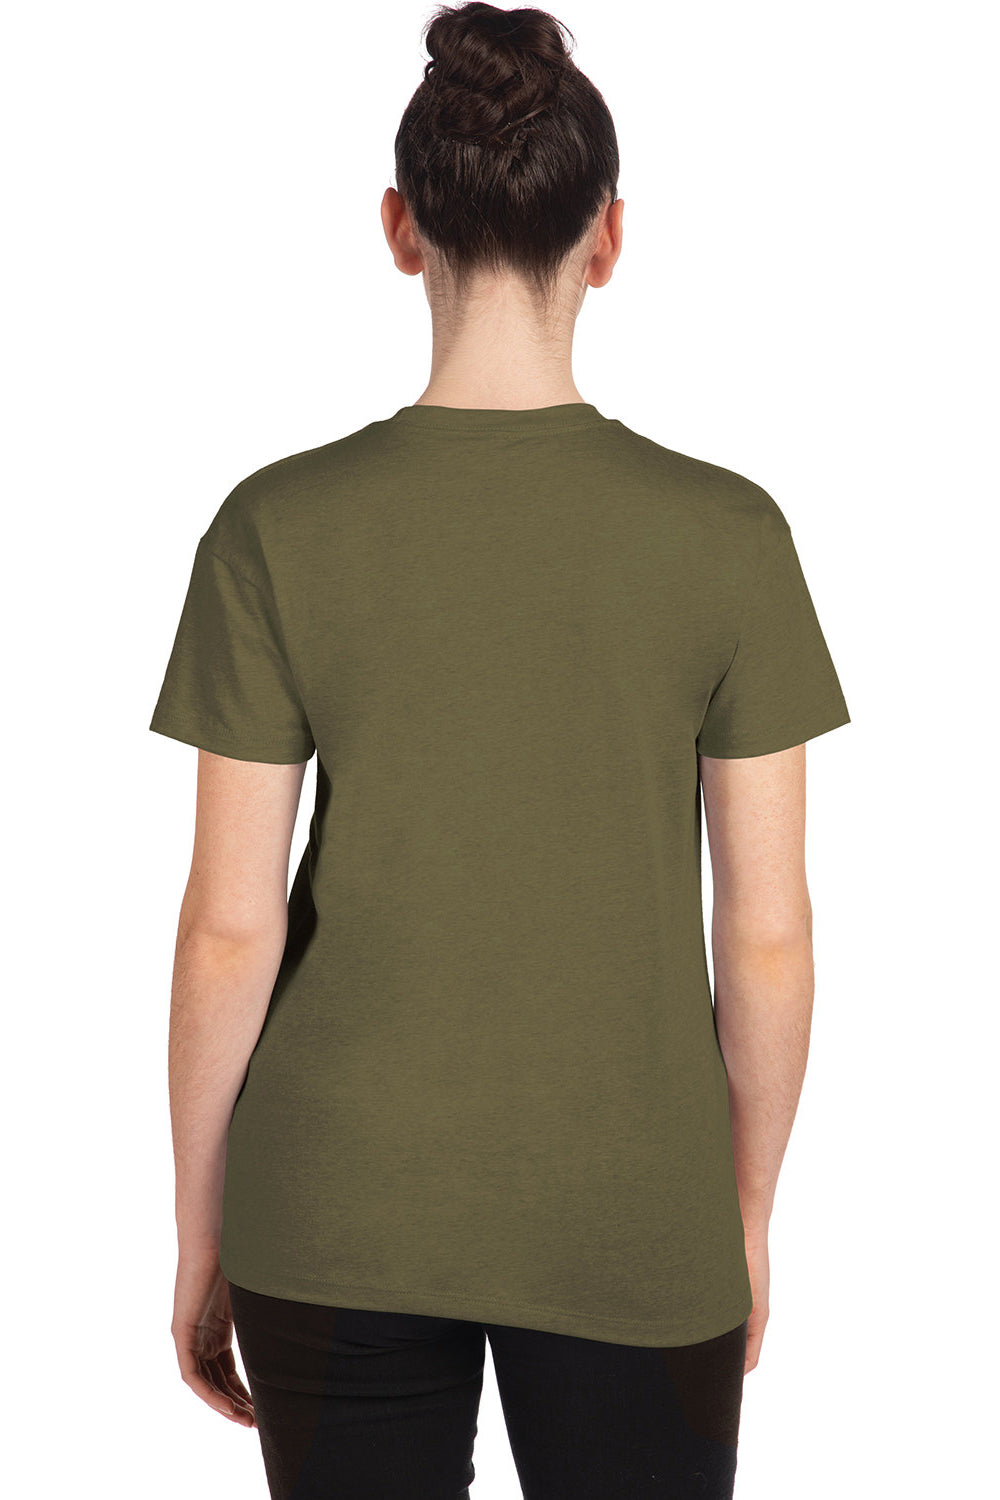 Next Level 6600 Womens Relaxed CVC Short Sleeve Crewneck T-Shirt Military Green Back